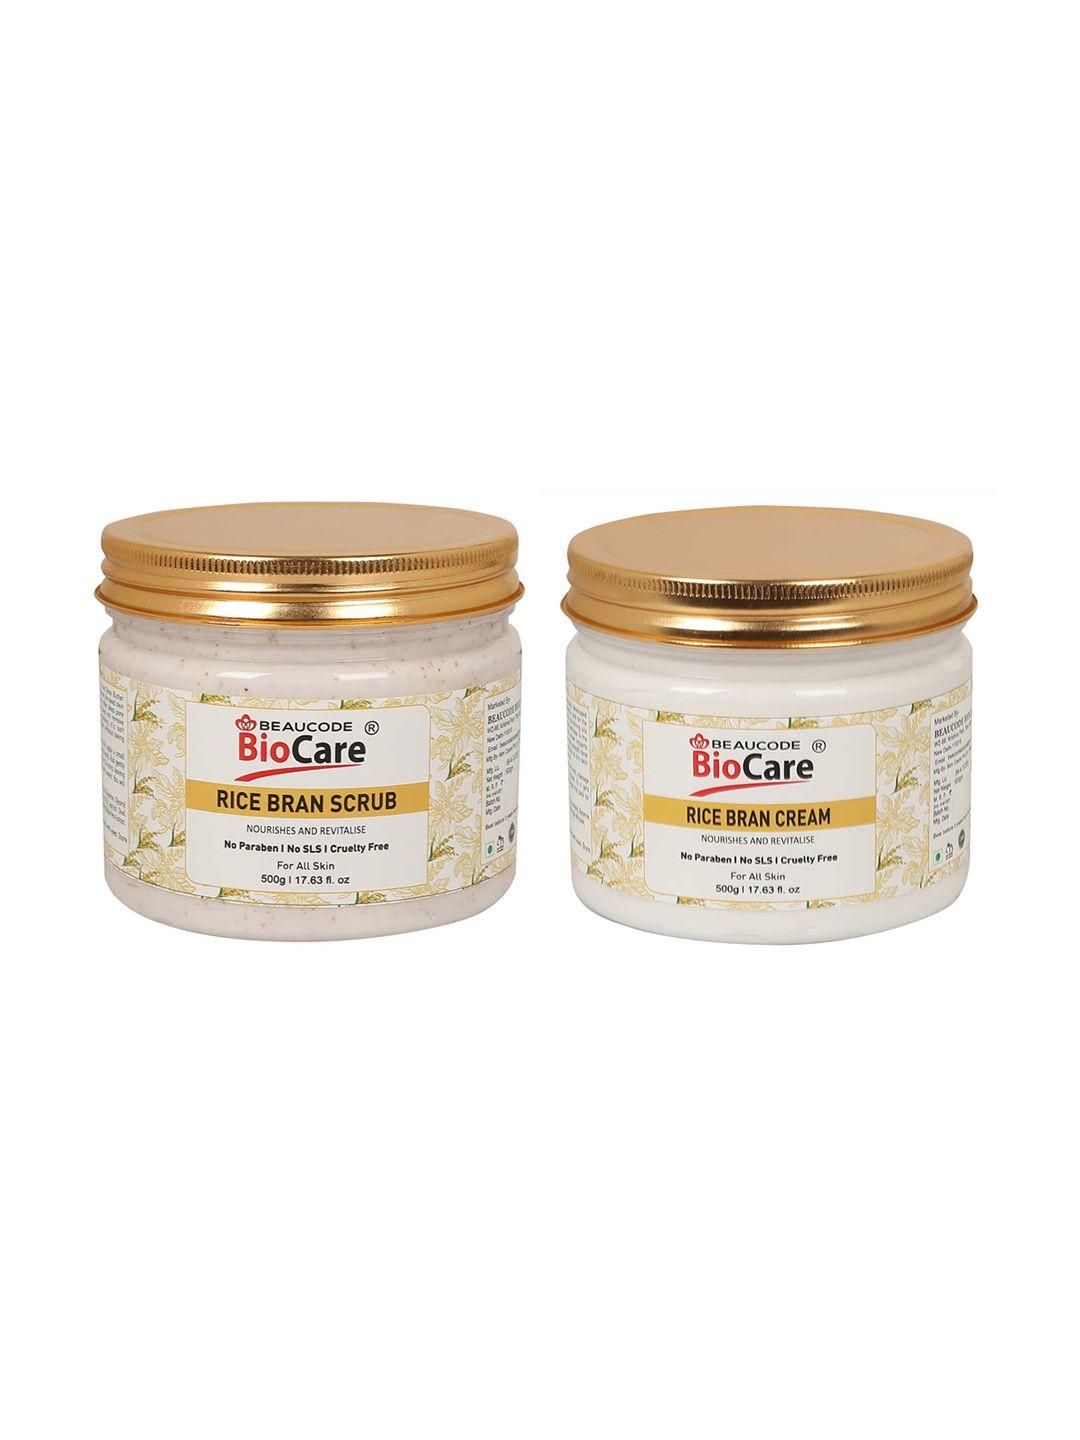 beaucode biocare set of 2 rice bran scrub & face cream - 500 g each